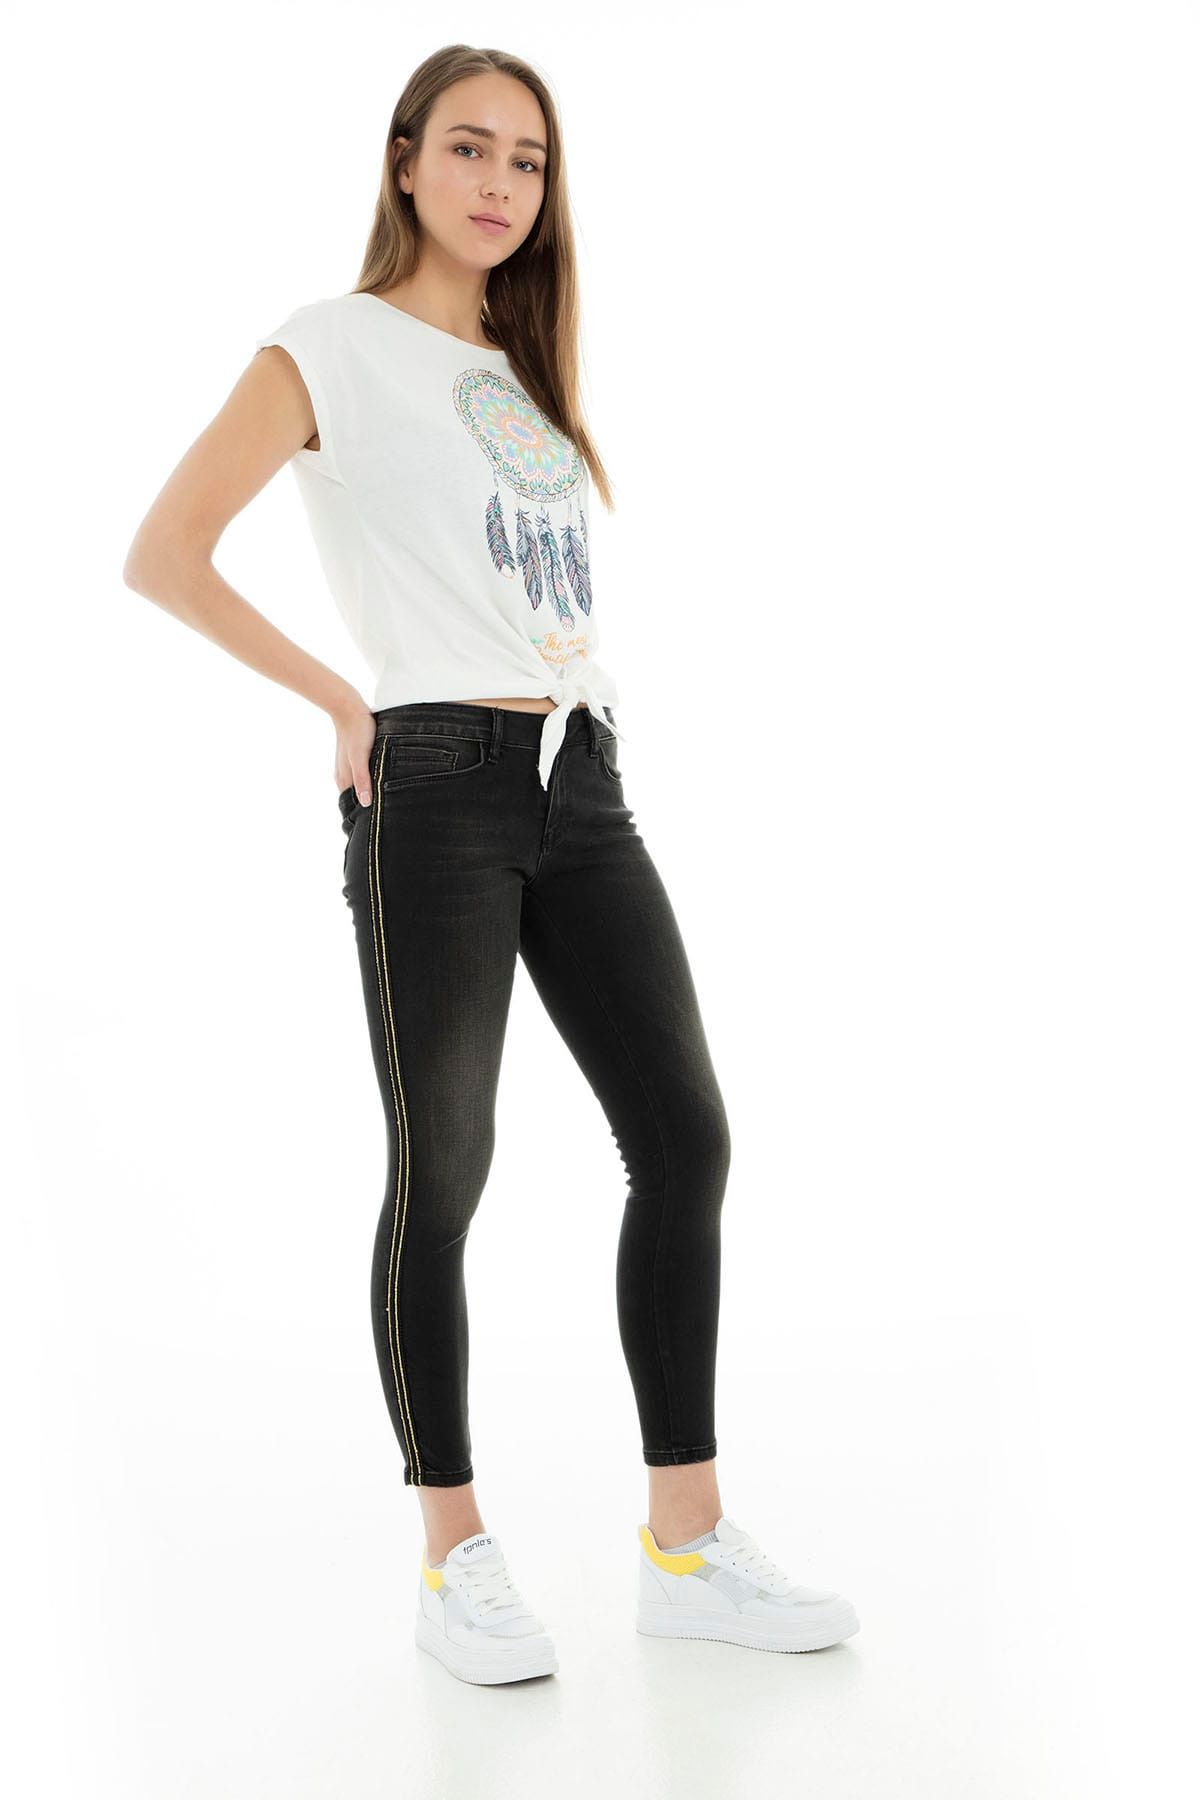 Five Pocket Kadın Siyah Jeans - 8519F2172Sandra